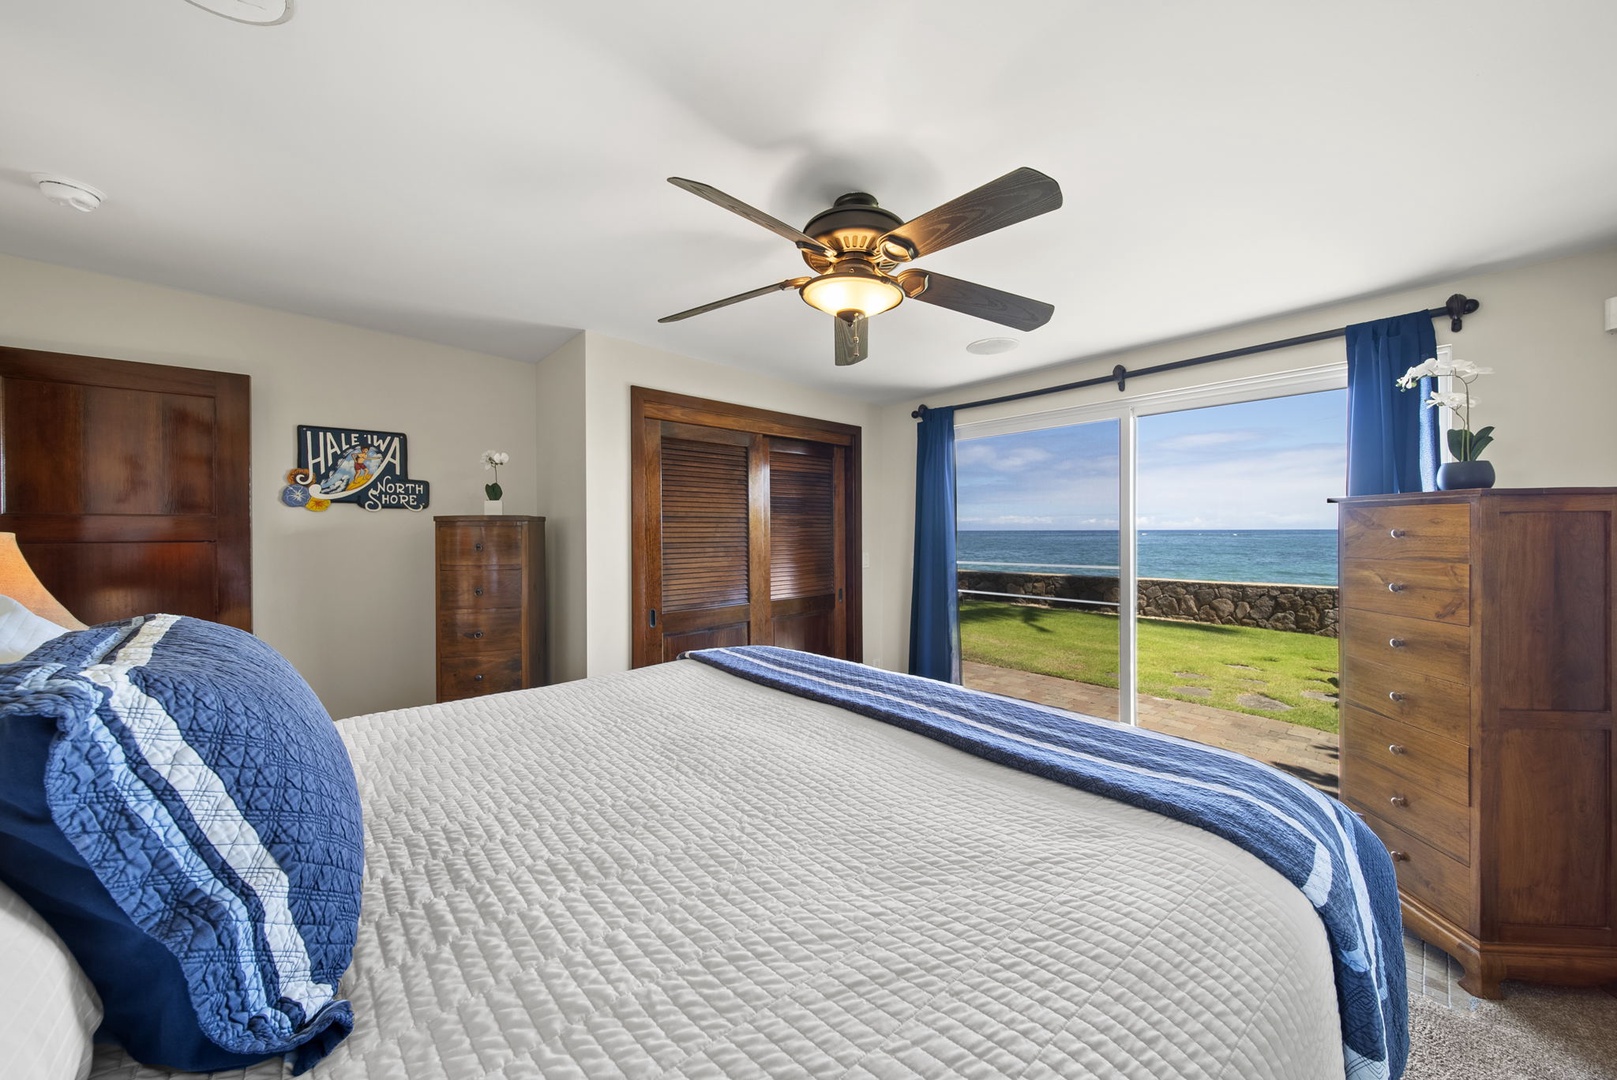 Waialua Vacation Rentals, Hale Oka Nunu - Guest Bedroom 1 has ocean views and sliding doors leading out to the backyard